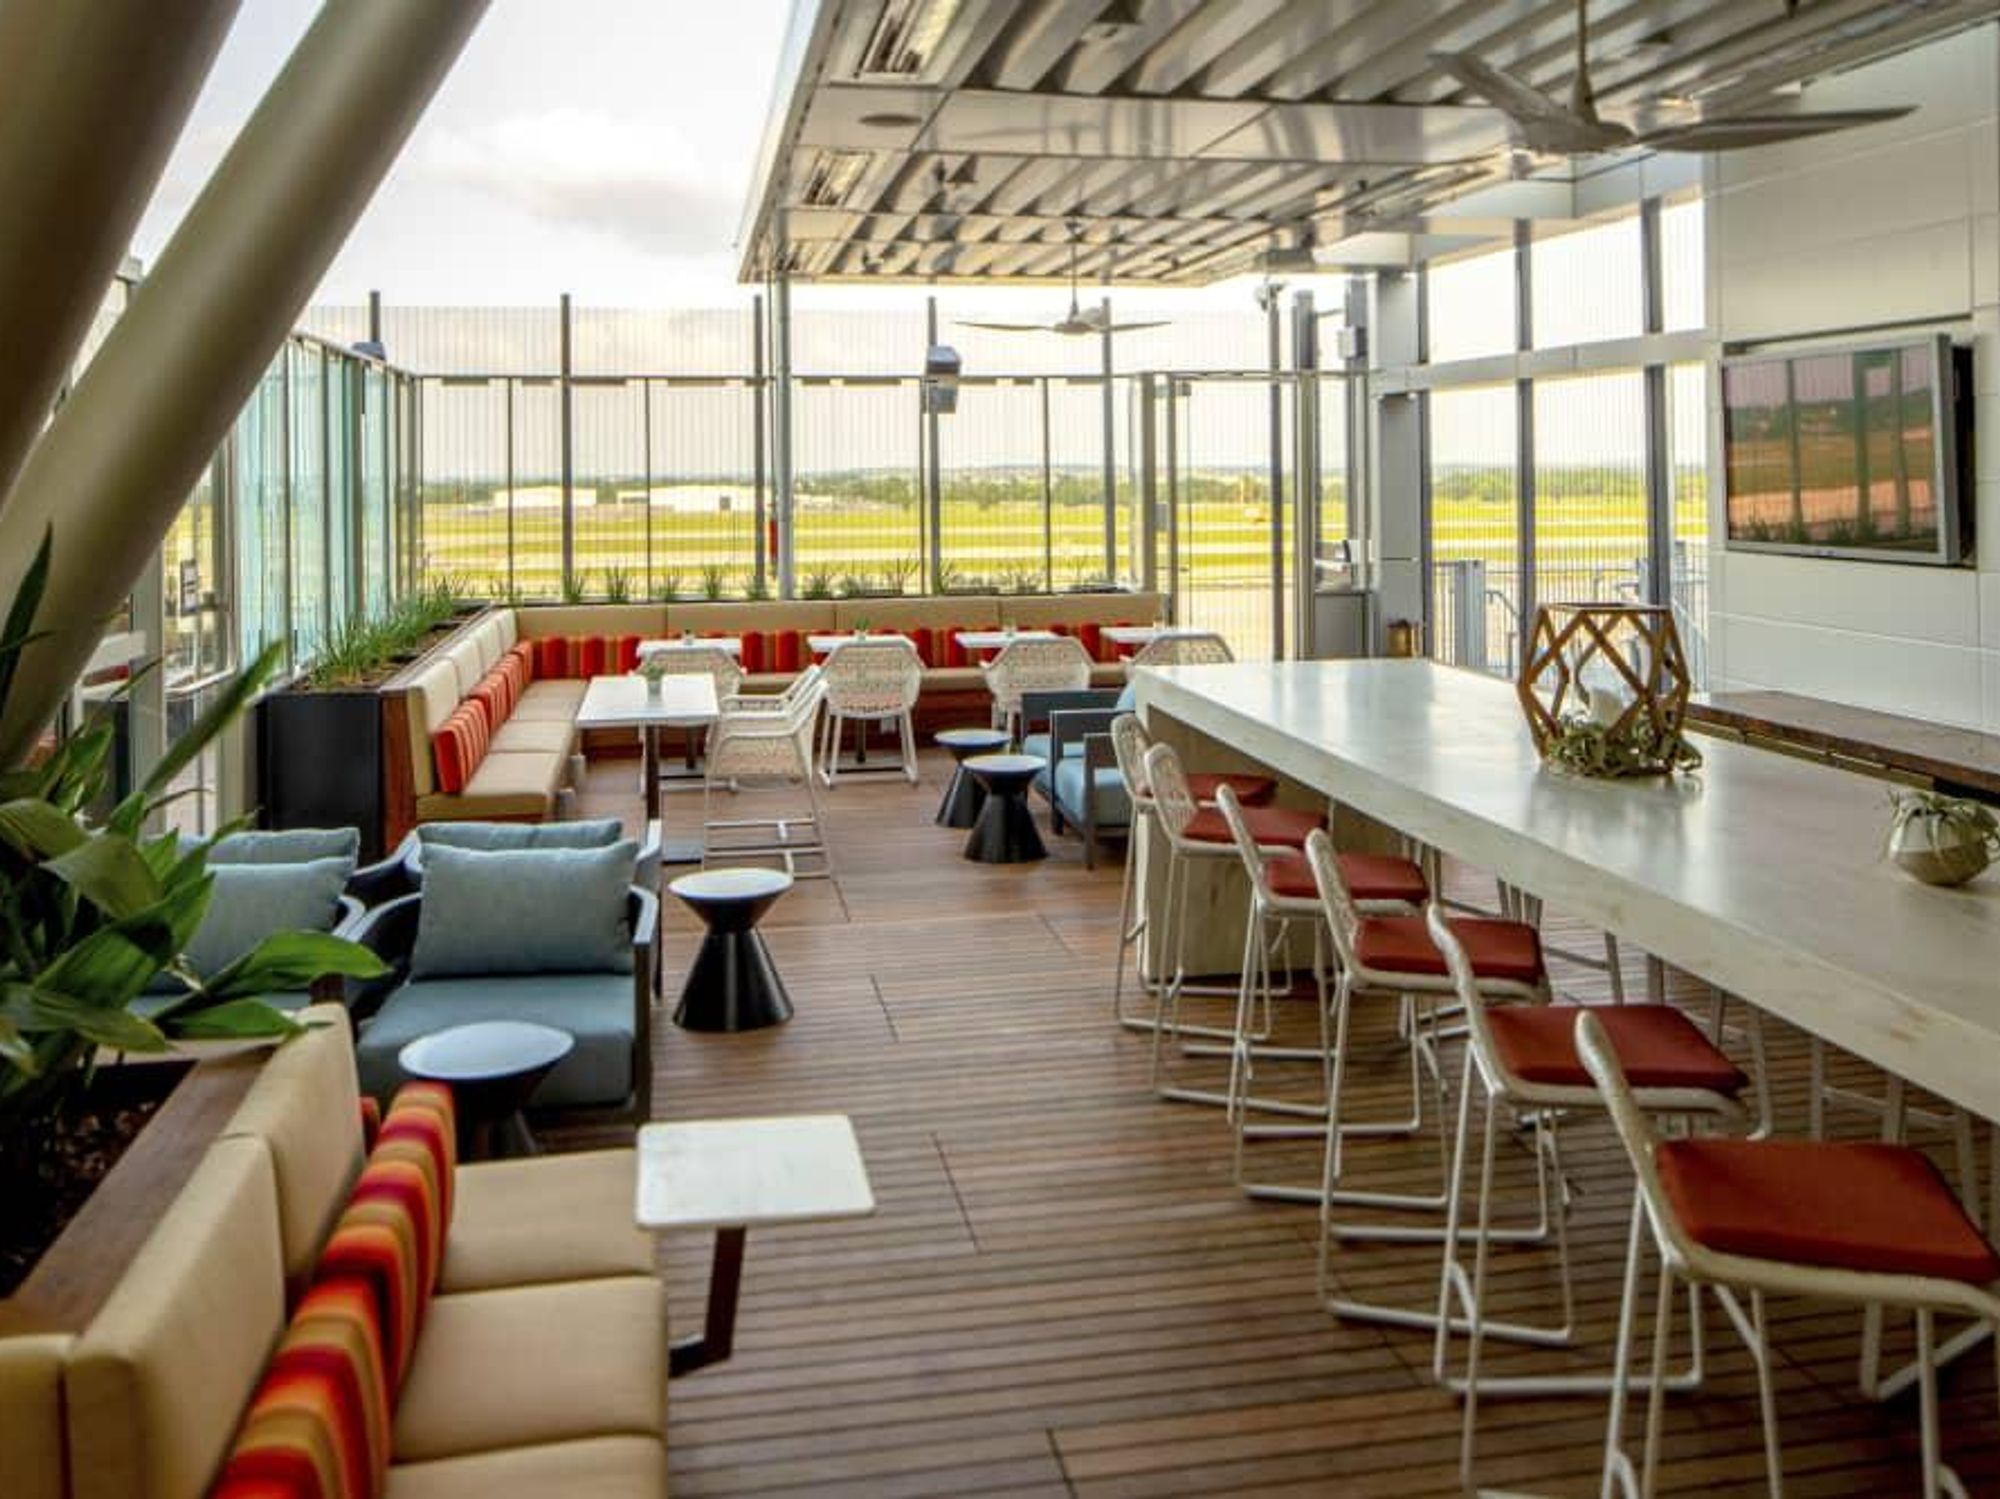 Delta lounge austin bergstrom international airport